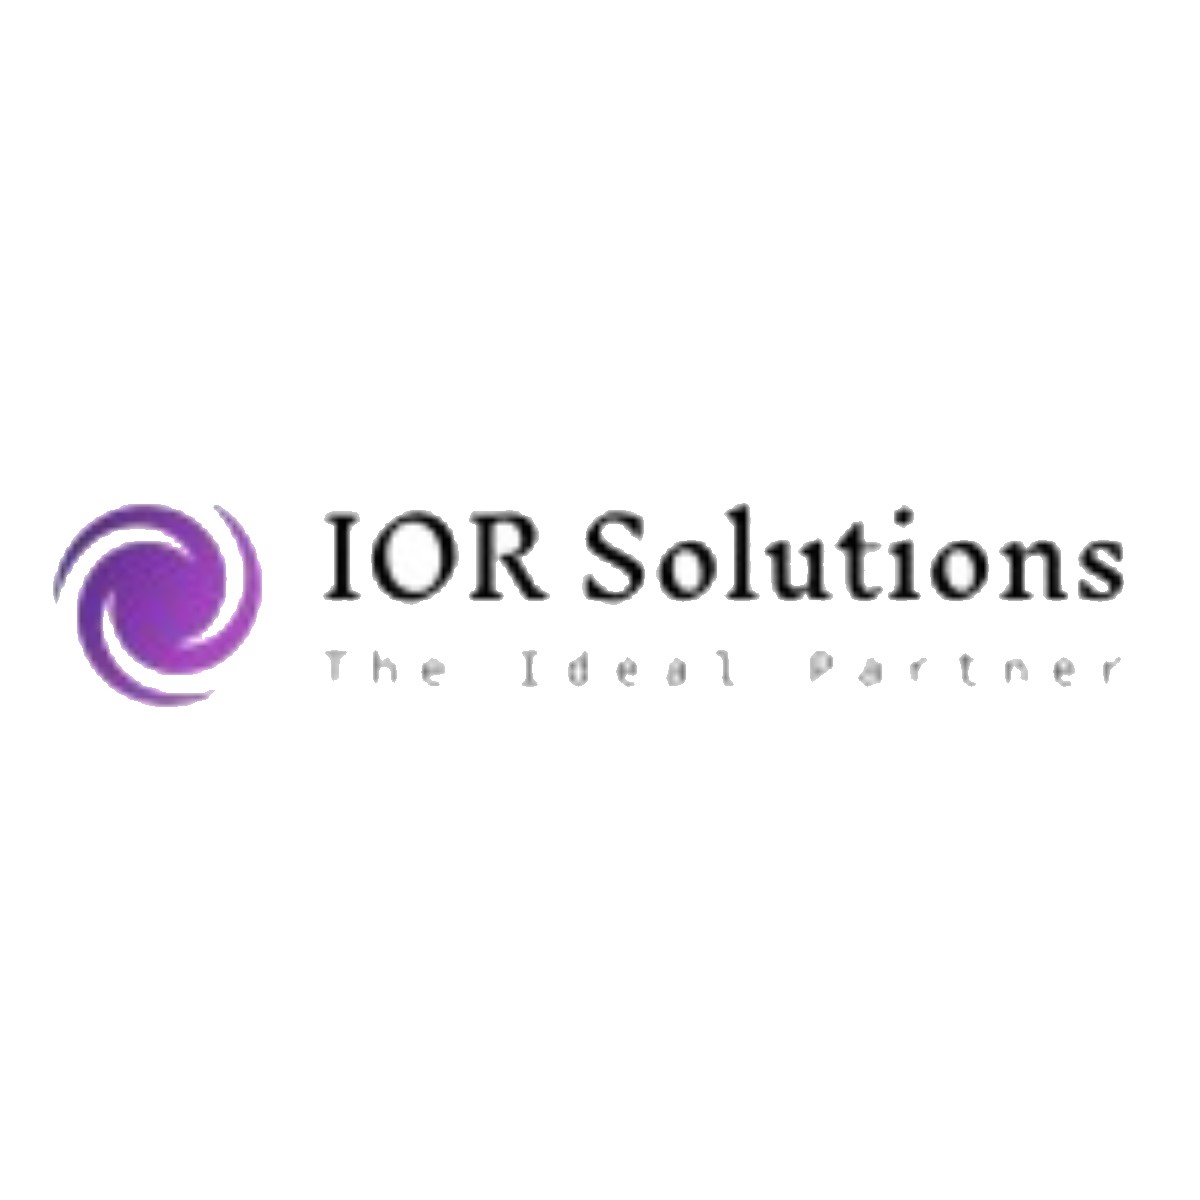 ior solutions